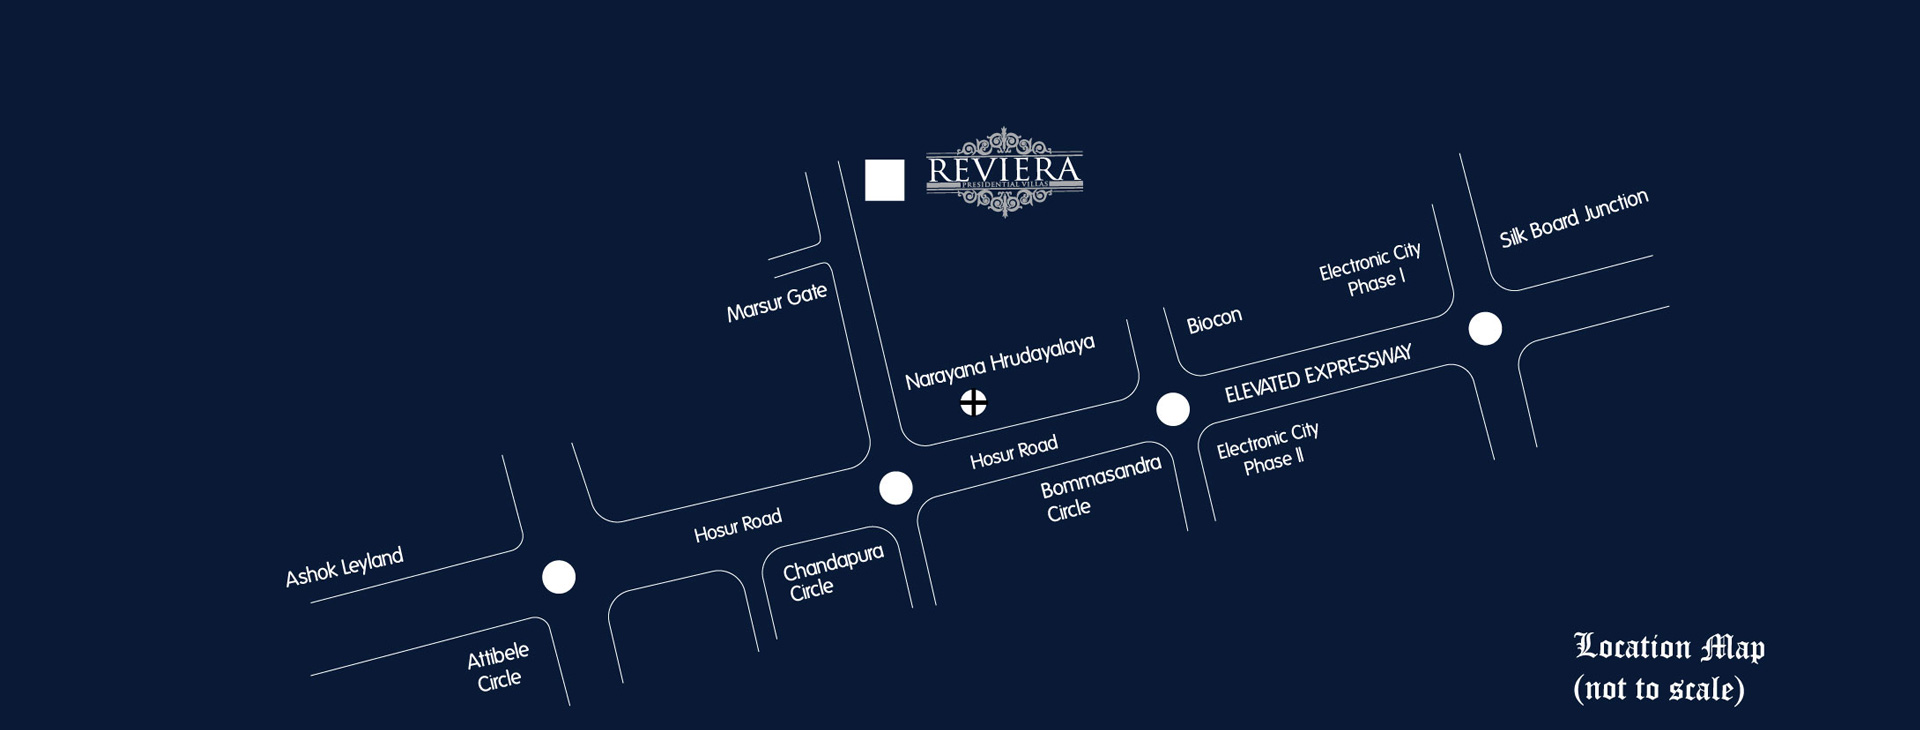 Artha Reviera Location Map